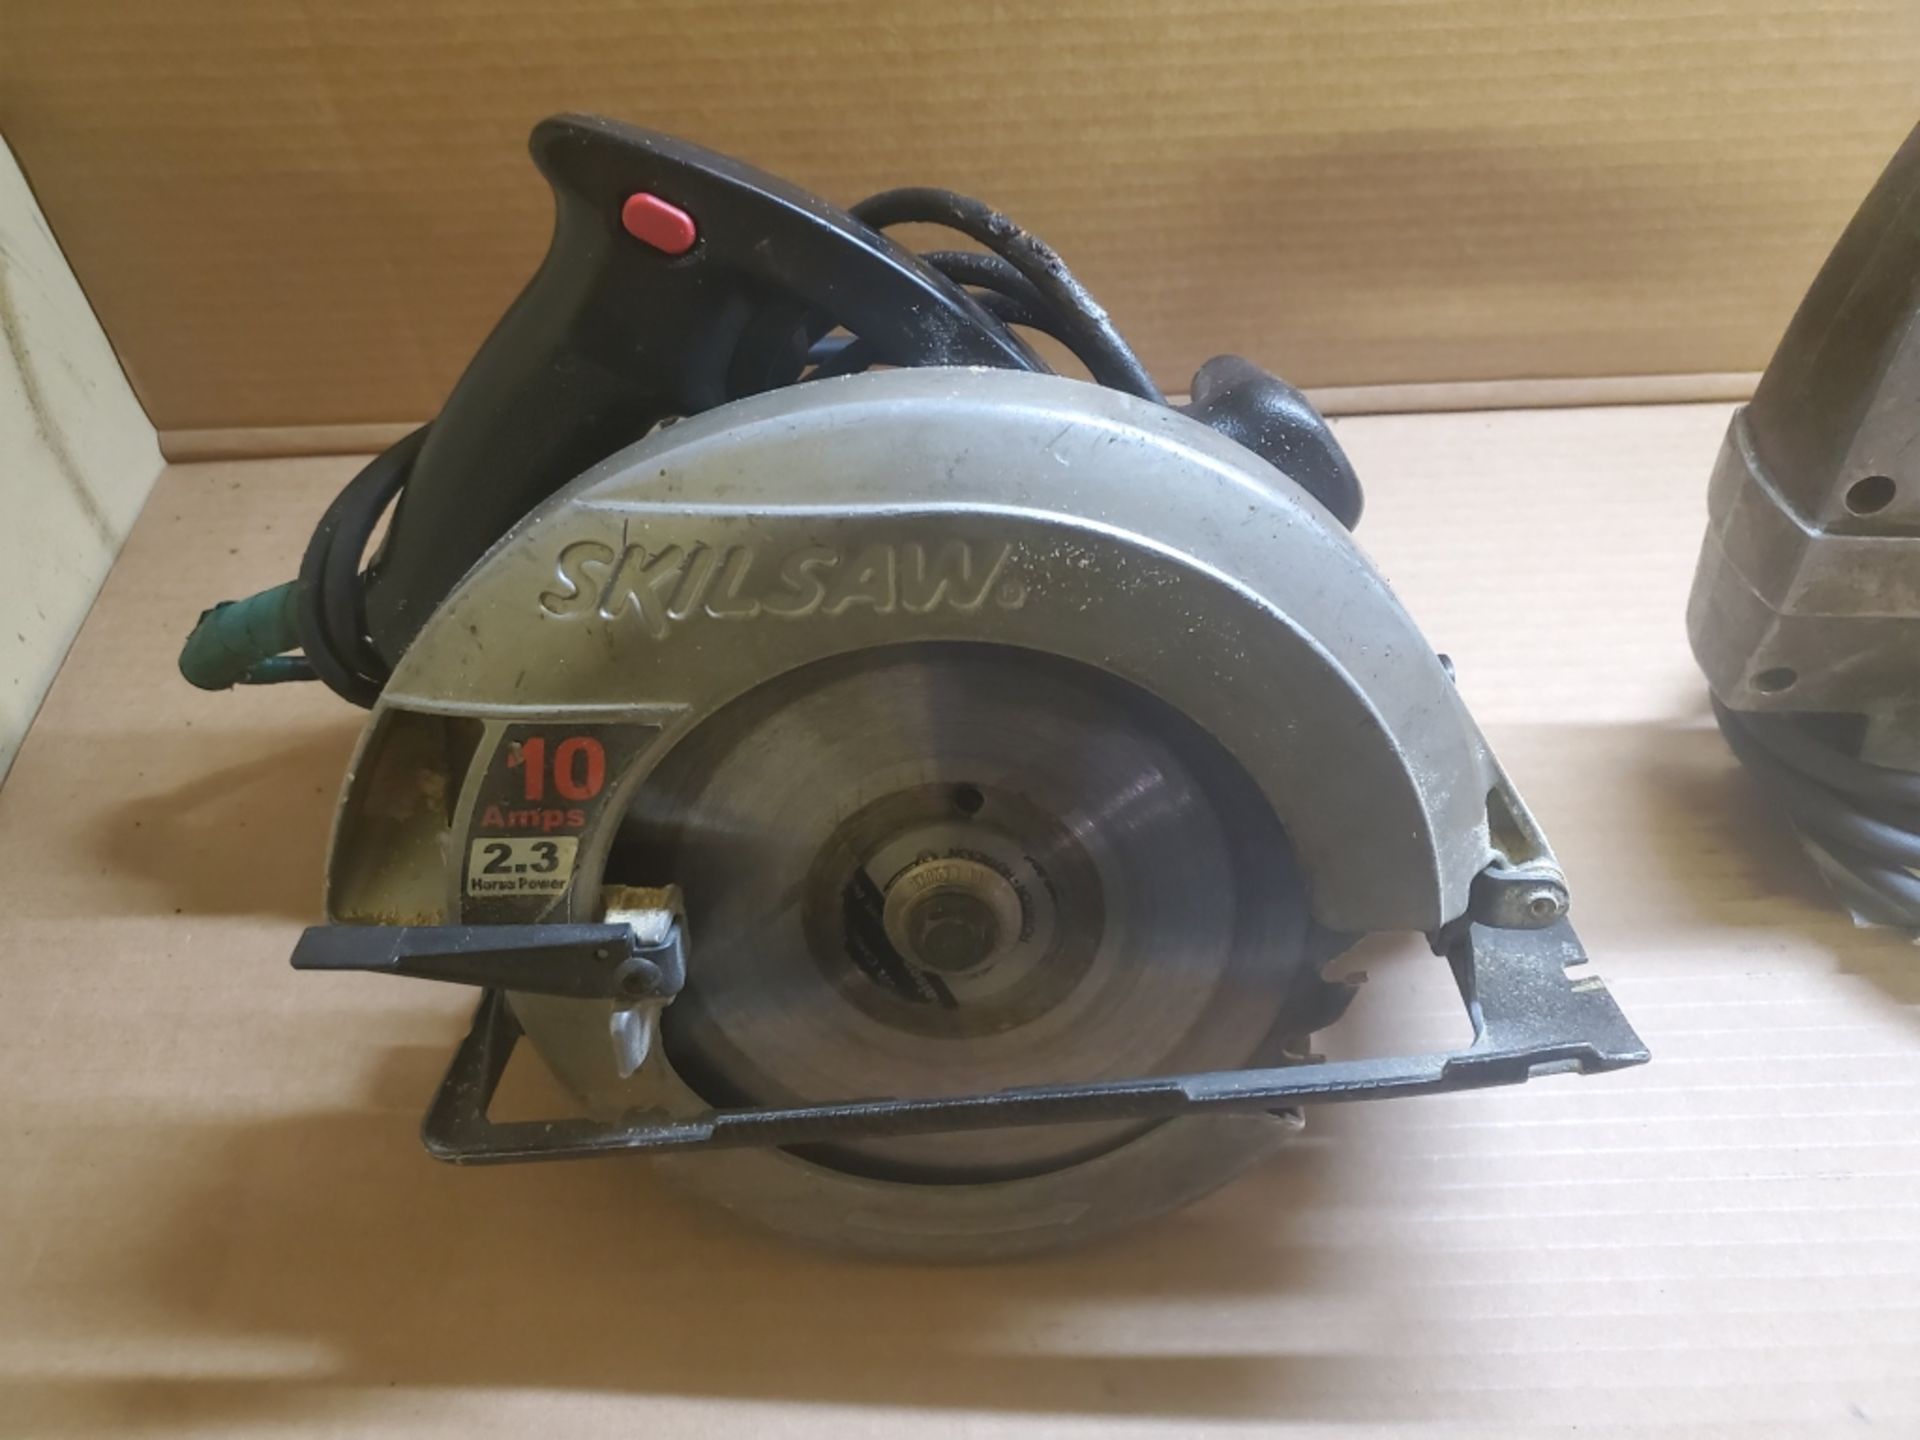 Skil 10 Amp 7.5" Circular Saw, (1) Skil Model 7292 Palm Sander, Master Craft Model 910 Jig Saw - Image 2 of 7